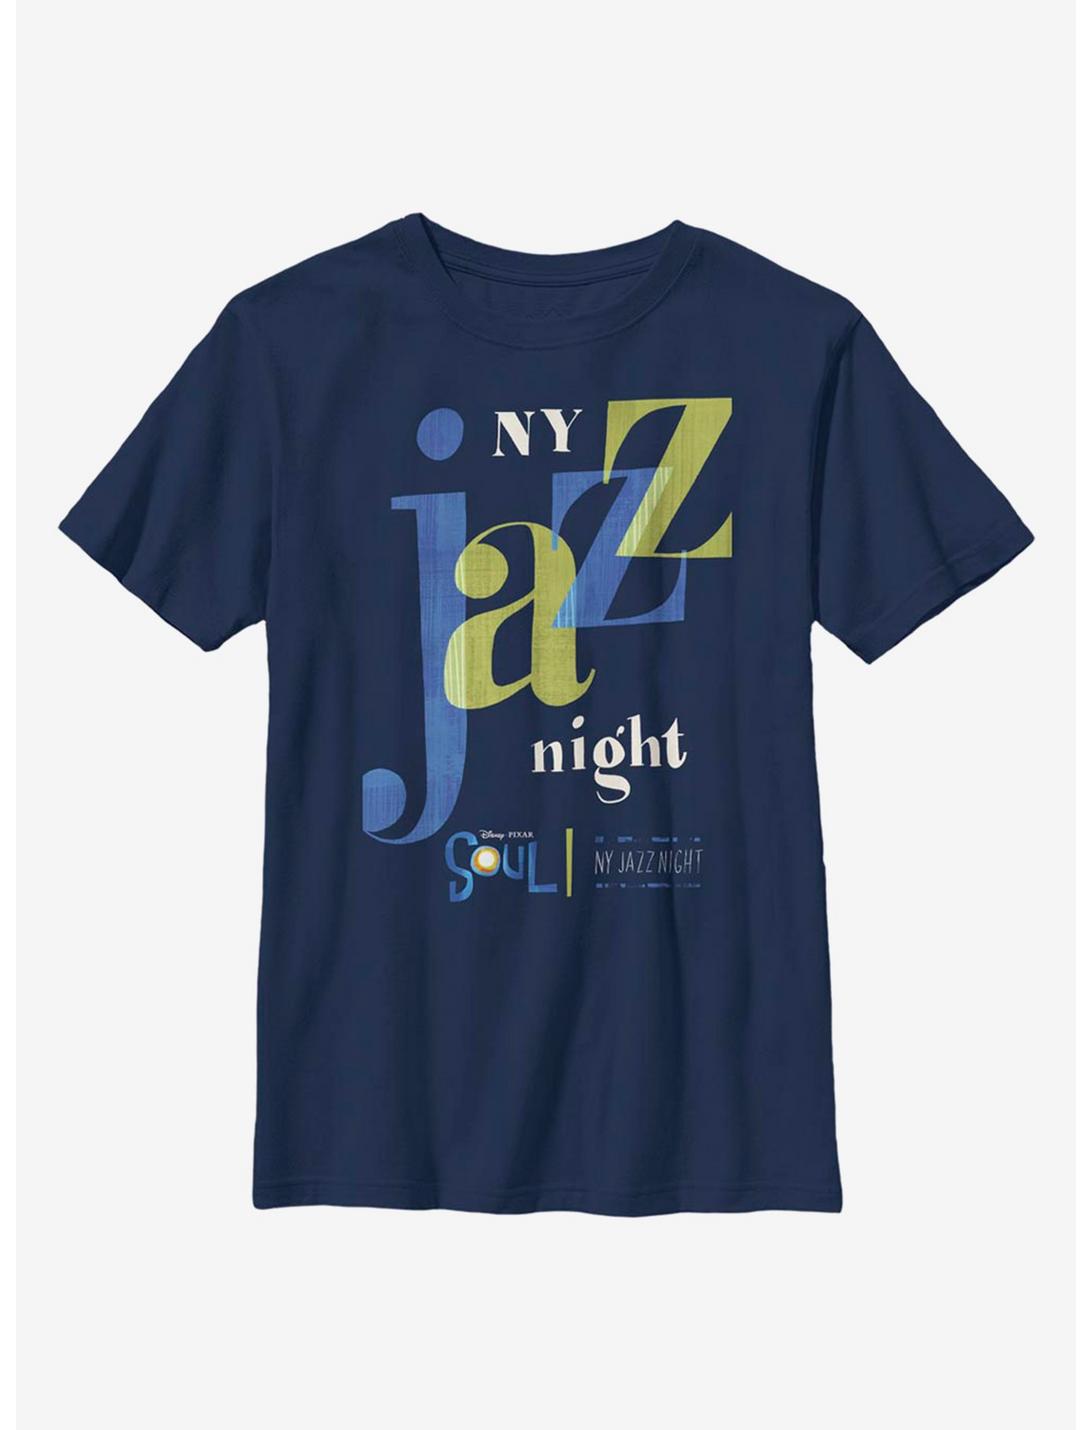 Disney Pixar Soul NY Jazz Night Youth T-Shirt, NAVY, hi-res